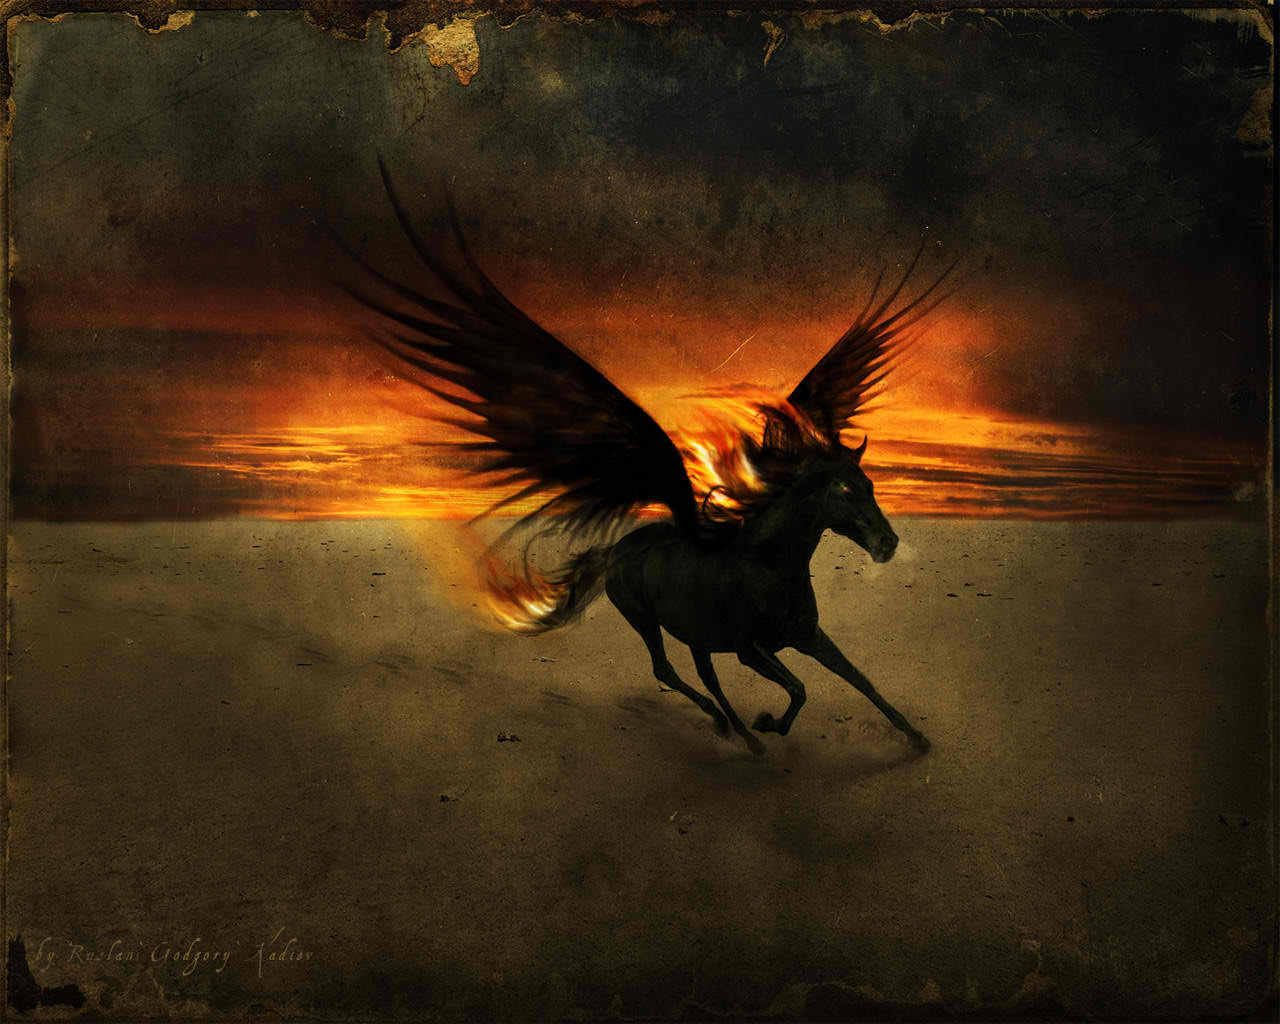 Pegasus Image HD Wallpaper And Background Photos